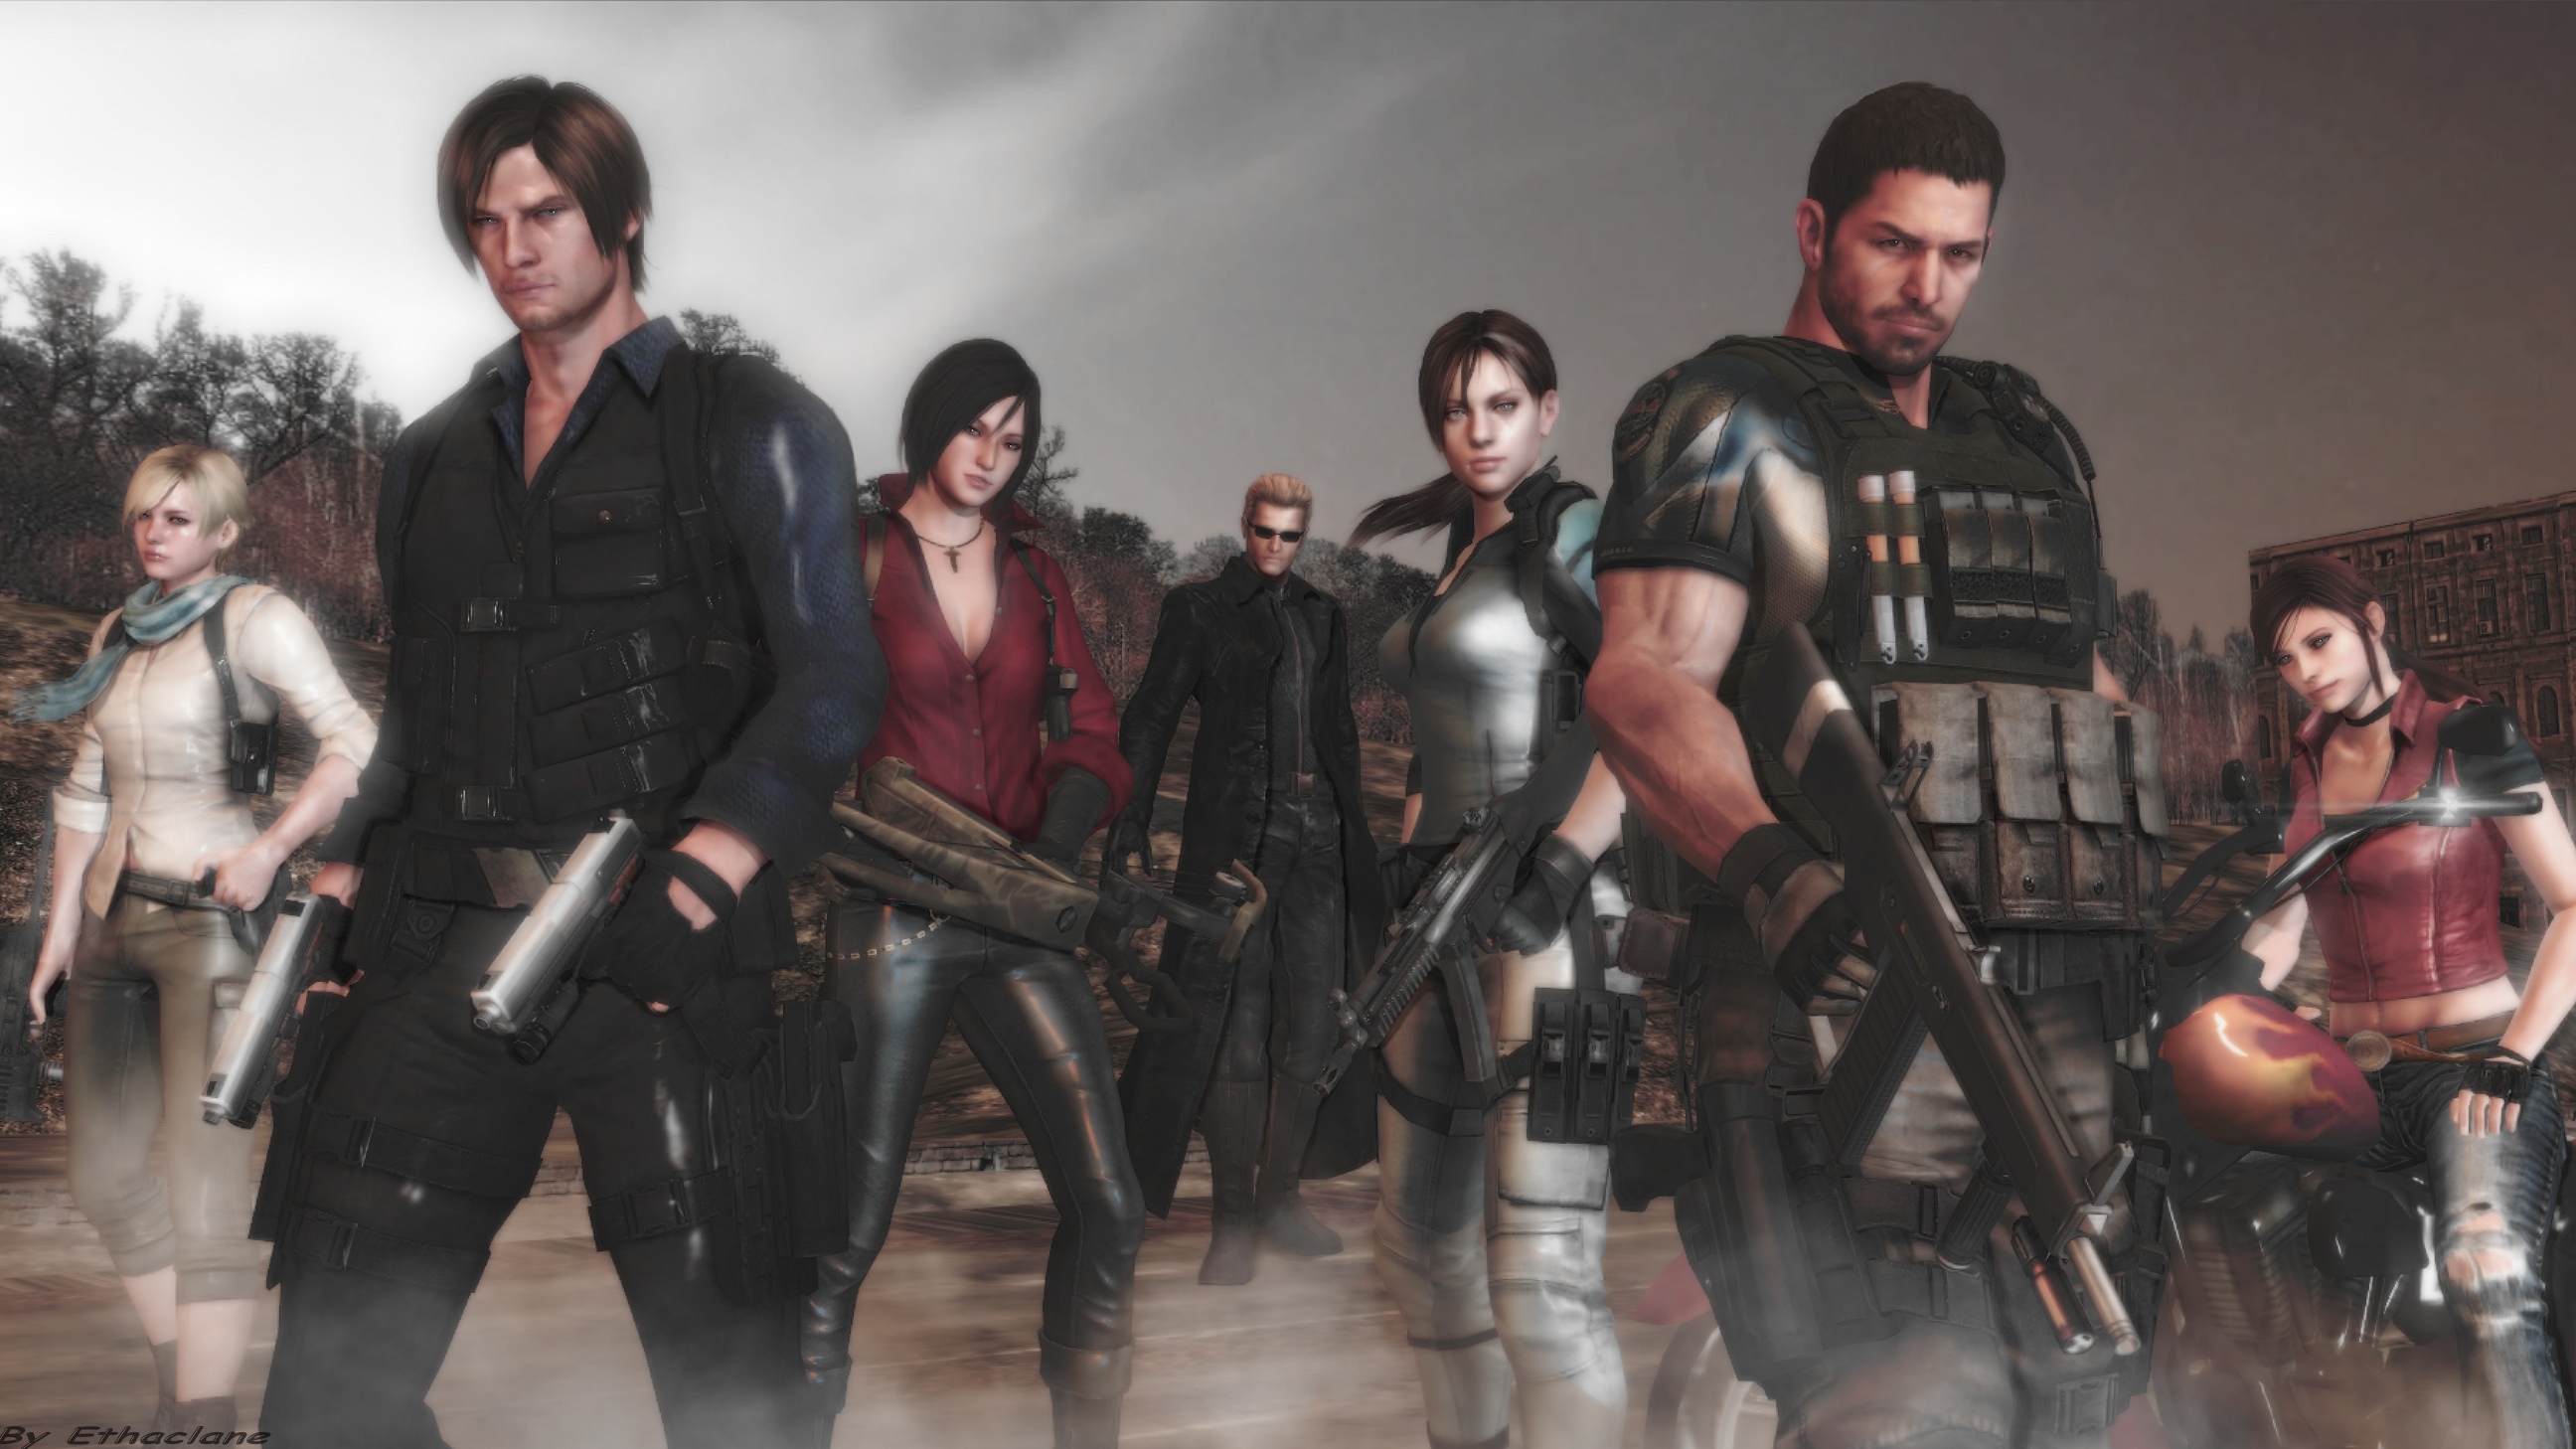 EvilSpecial  Saiba mais sobre os principais dubladores de Resident Evil 4  Remake - EvilHazard